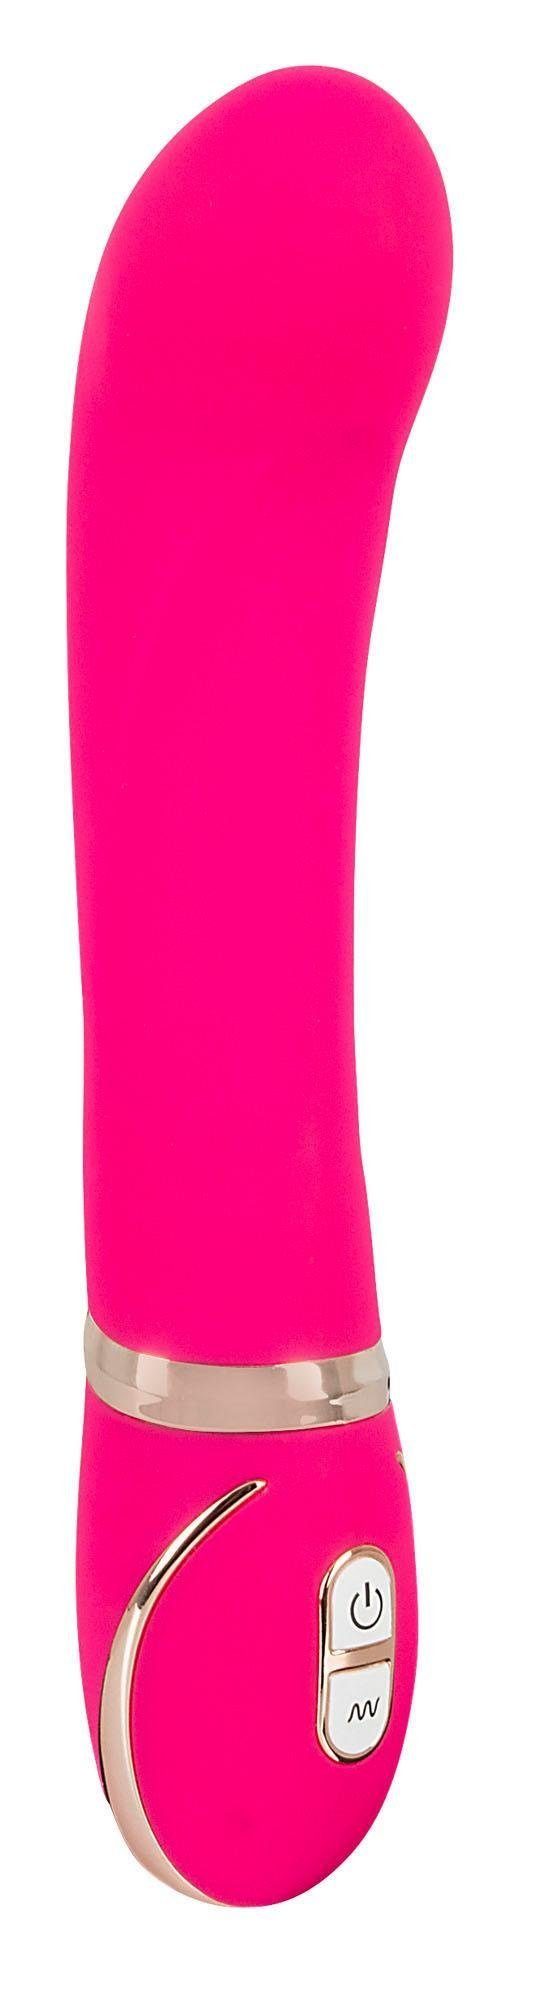 Vibe Couture G-Punkt-Vibrator Front Row Pink, wasserdicht | Klassische Vibratoren